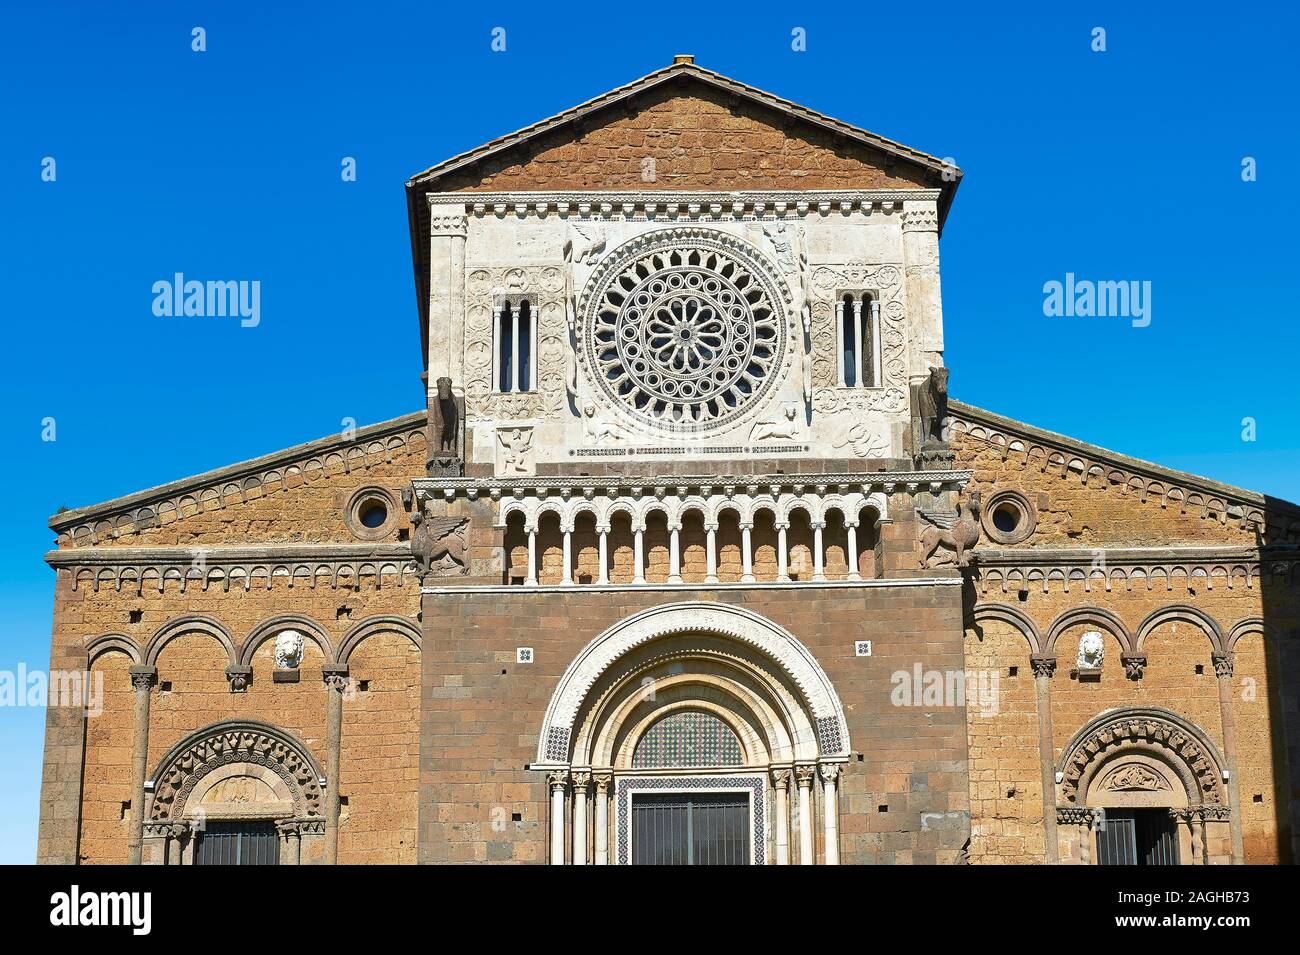 Fachada del siglo XII el siglo VIII basílica románica iglesia de St Peters, Tuscania, Lacio, Italia Foto de stock